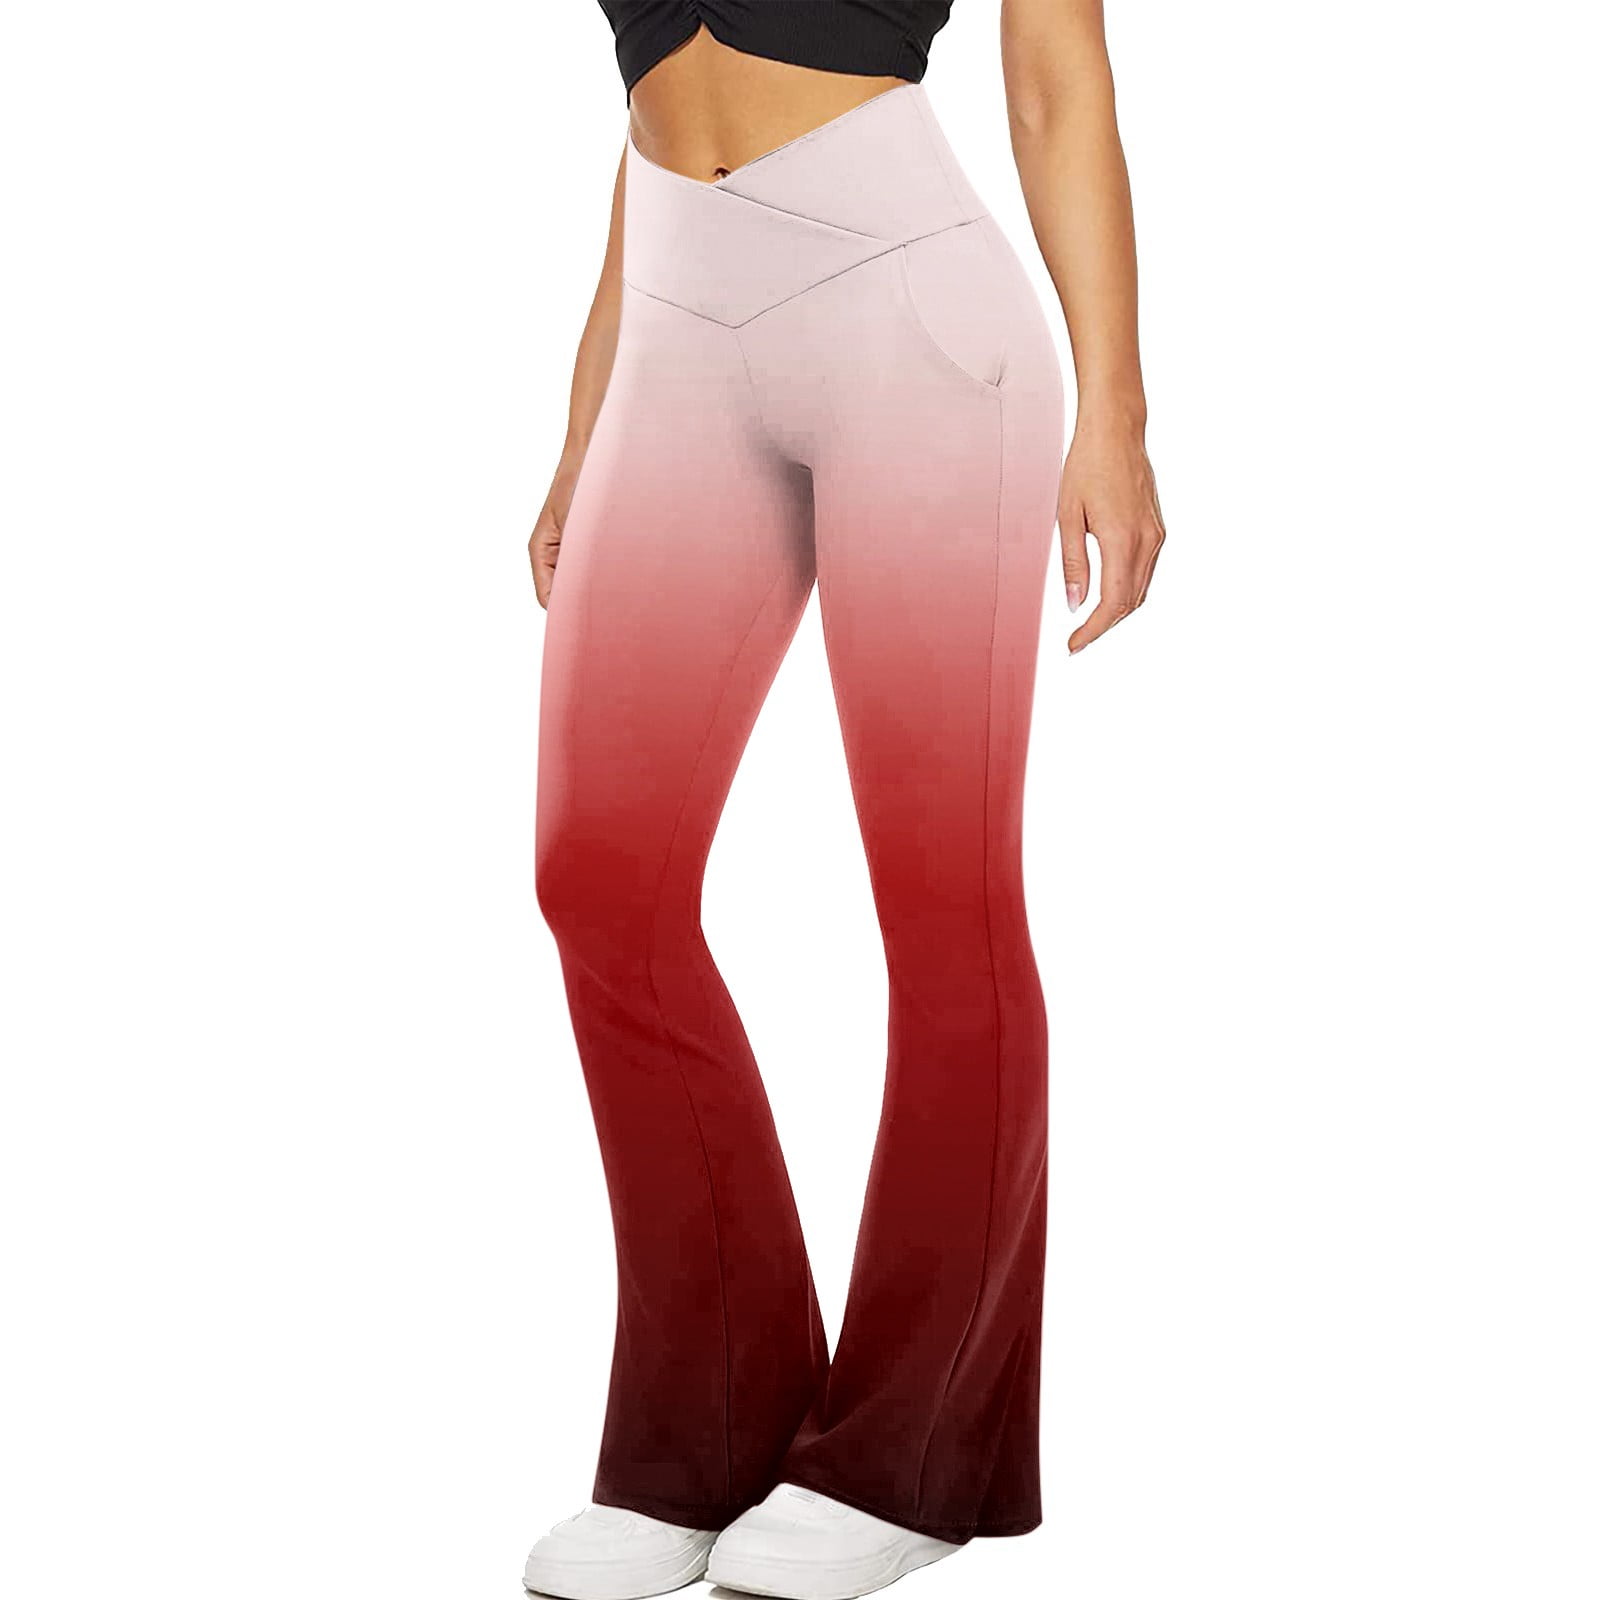 Vimbloom Bootcut Yoga Pants Women High Waist Bootleg Trousers Tummy Control  Workout Flare Pants with Pockets Pilates Boot Cut Gym Leggings VI490(Dark  Blue L) - ShopStyle